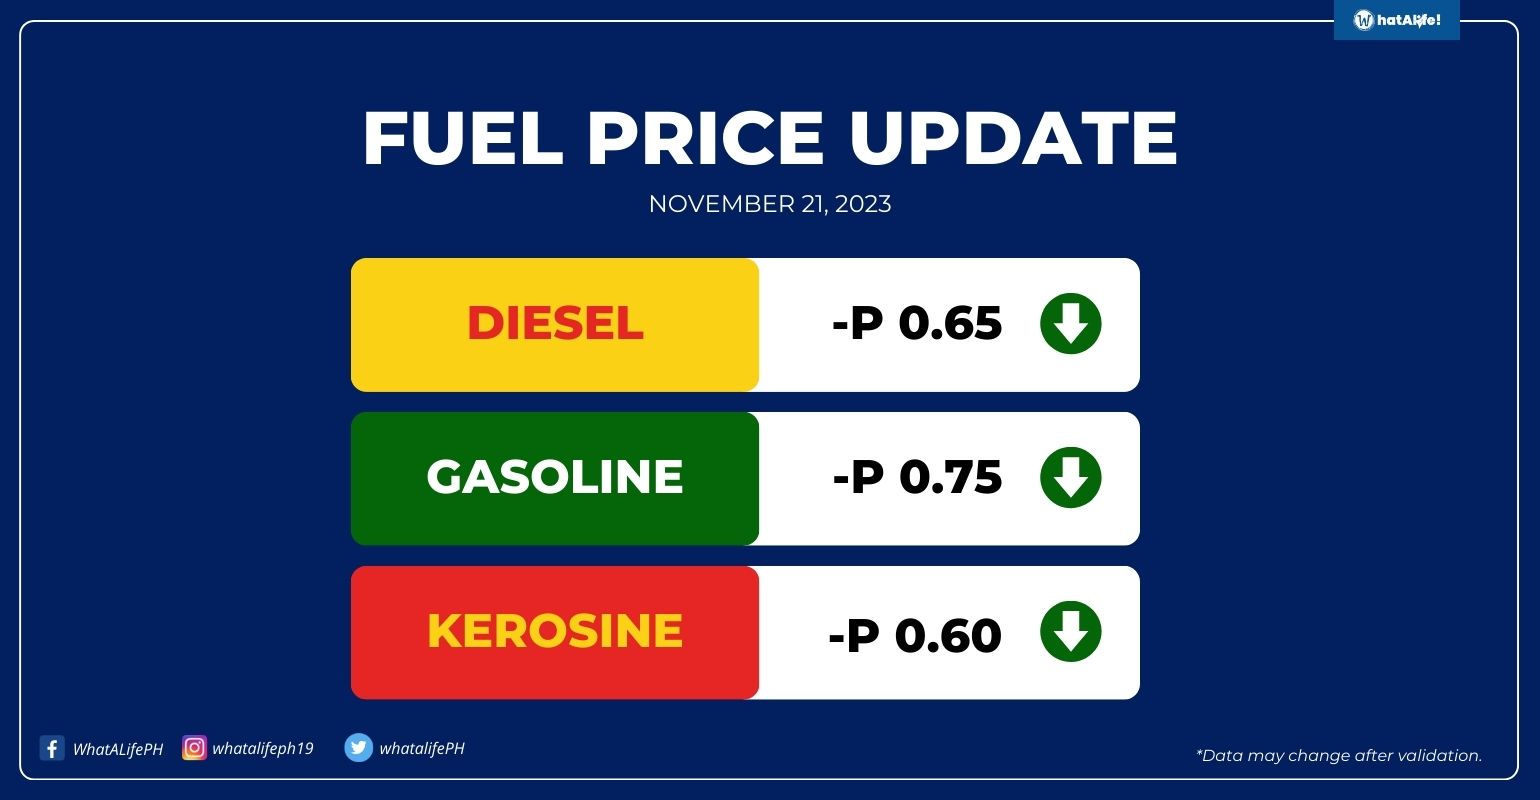 Fuel price rollback effective November 21, 2023